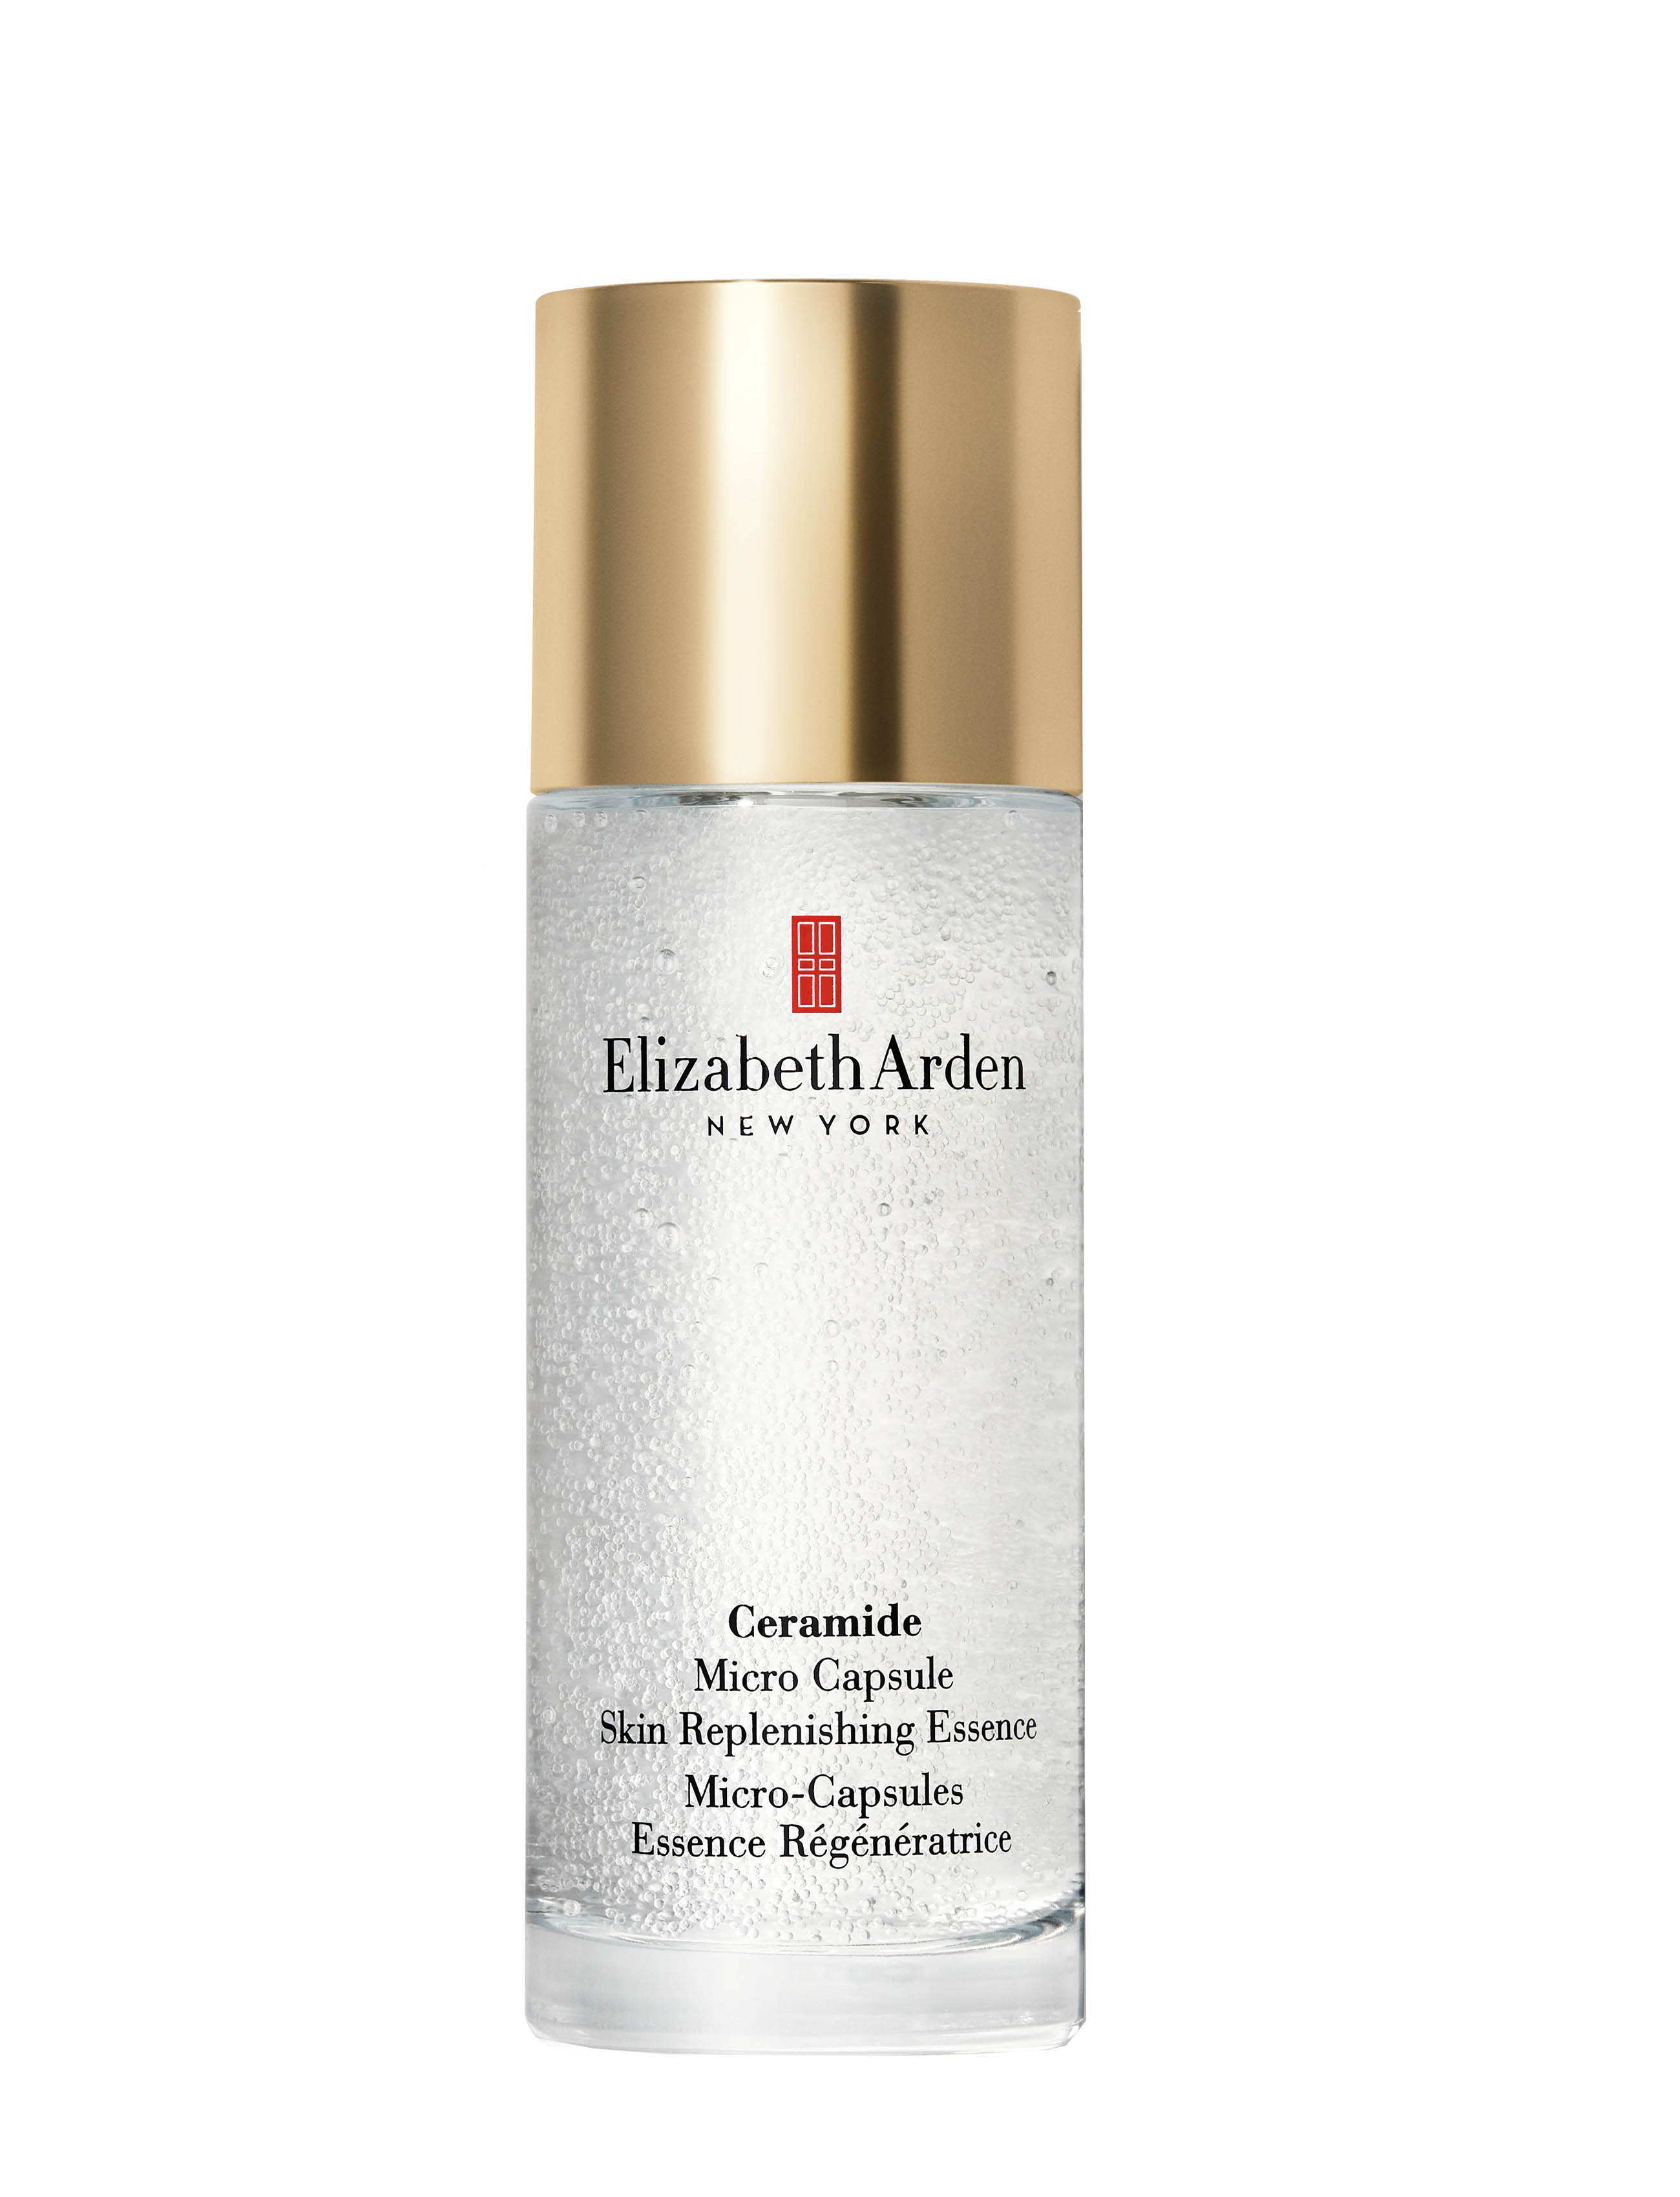  Ceramide Micro Capsule Skin Replenishing Essence